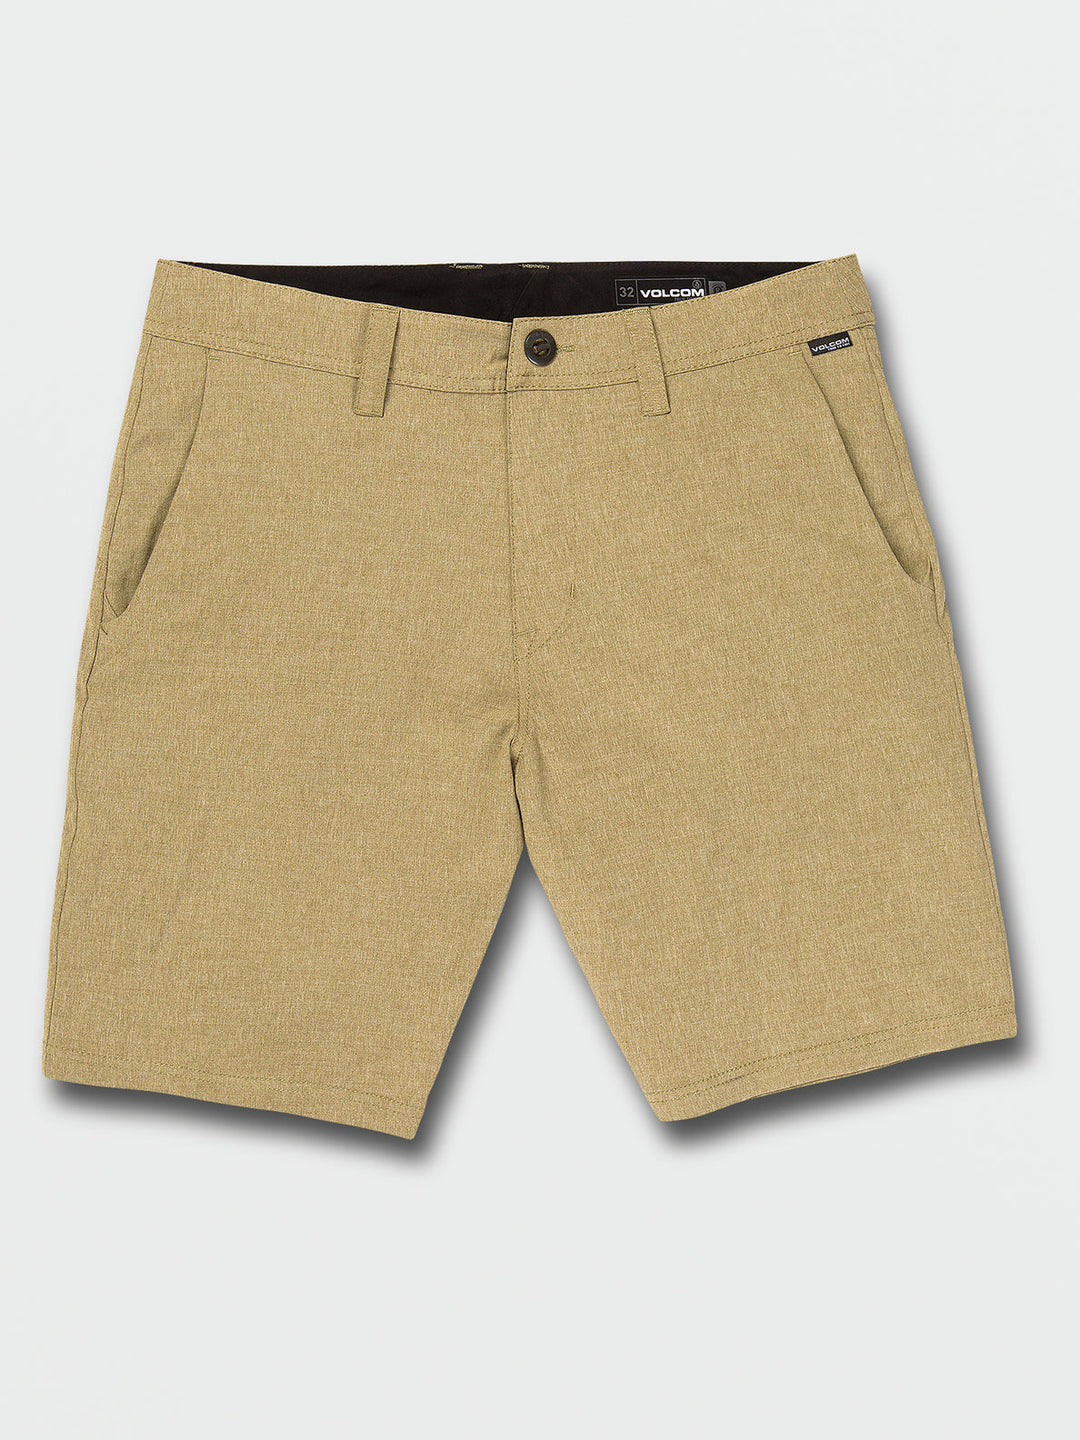 Volcom Frickin Cross Shred Static Shorts - Dark Khaki - Sun Diego Boardshop